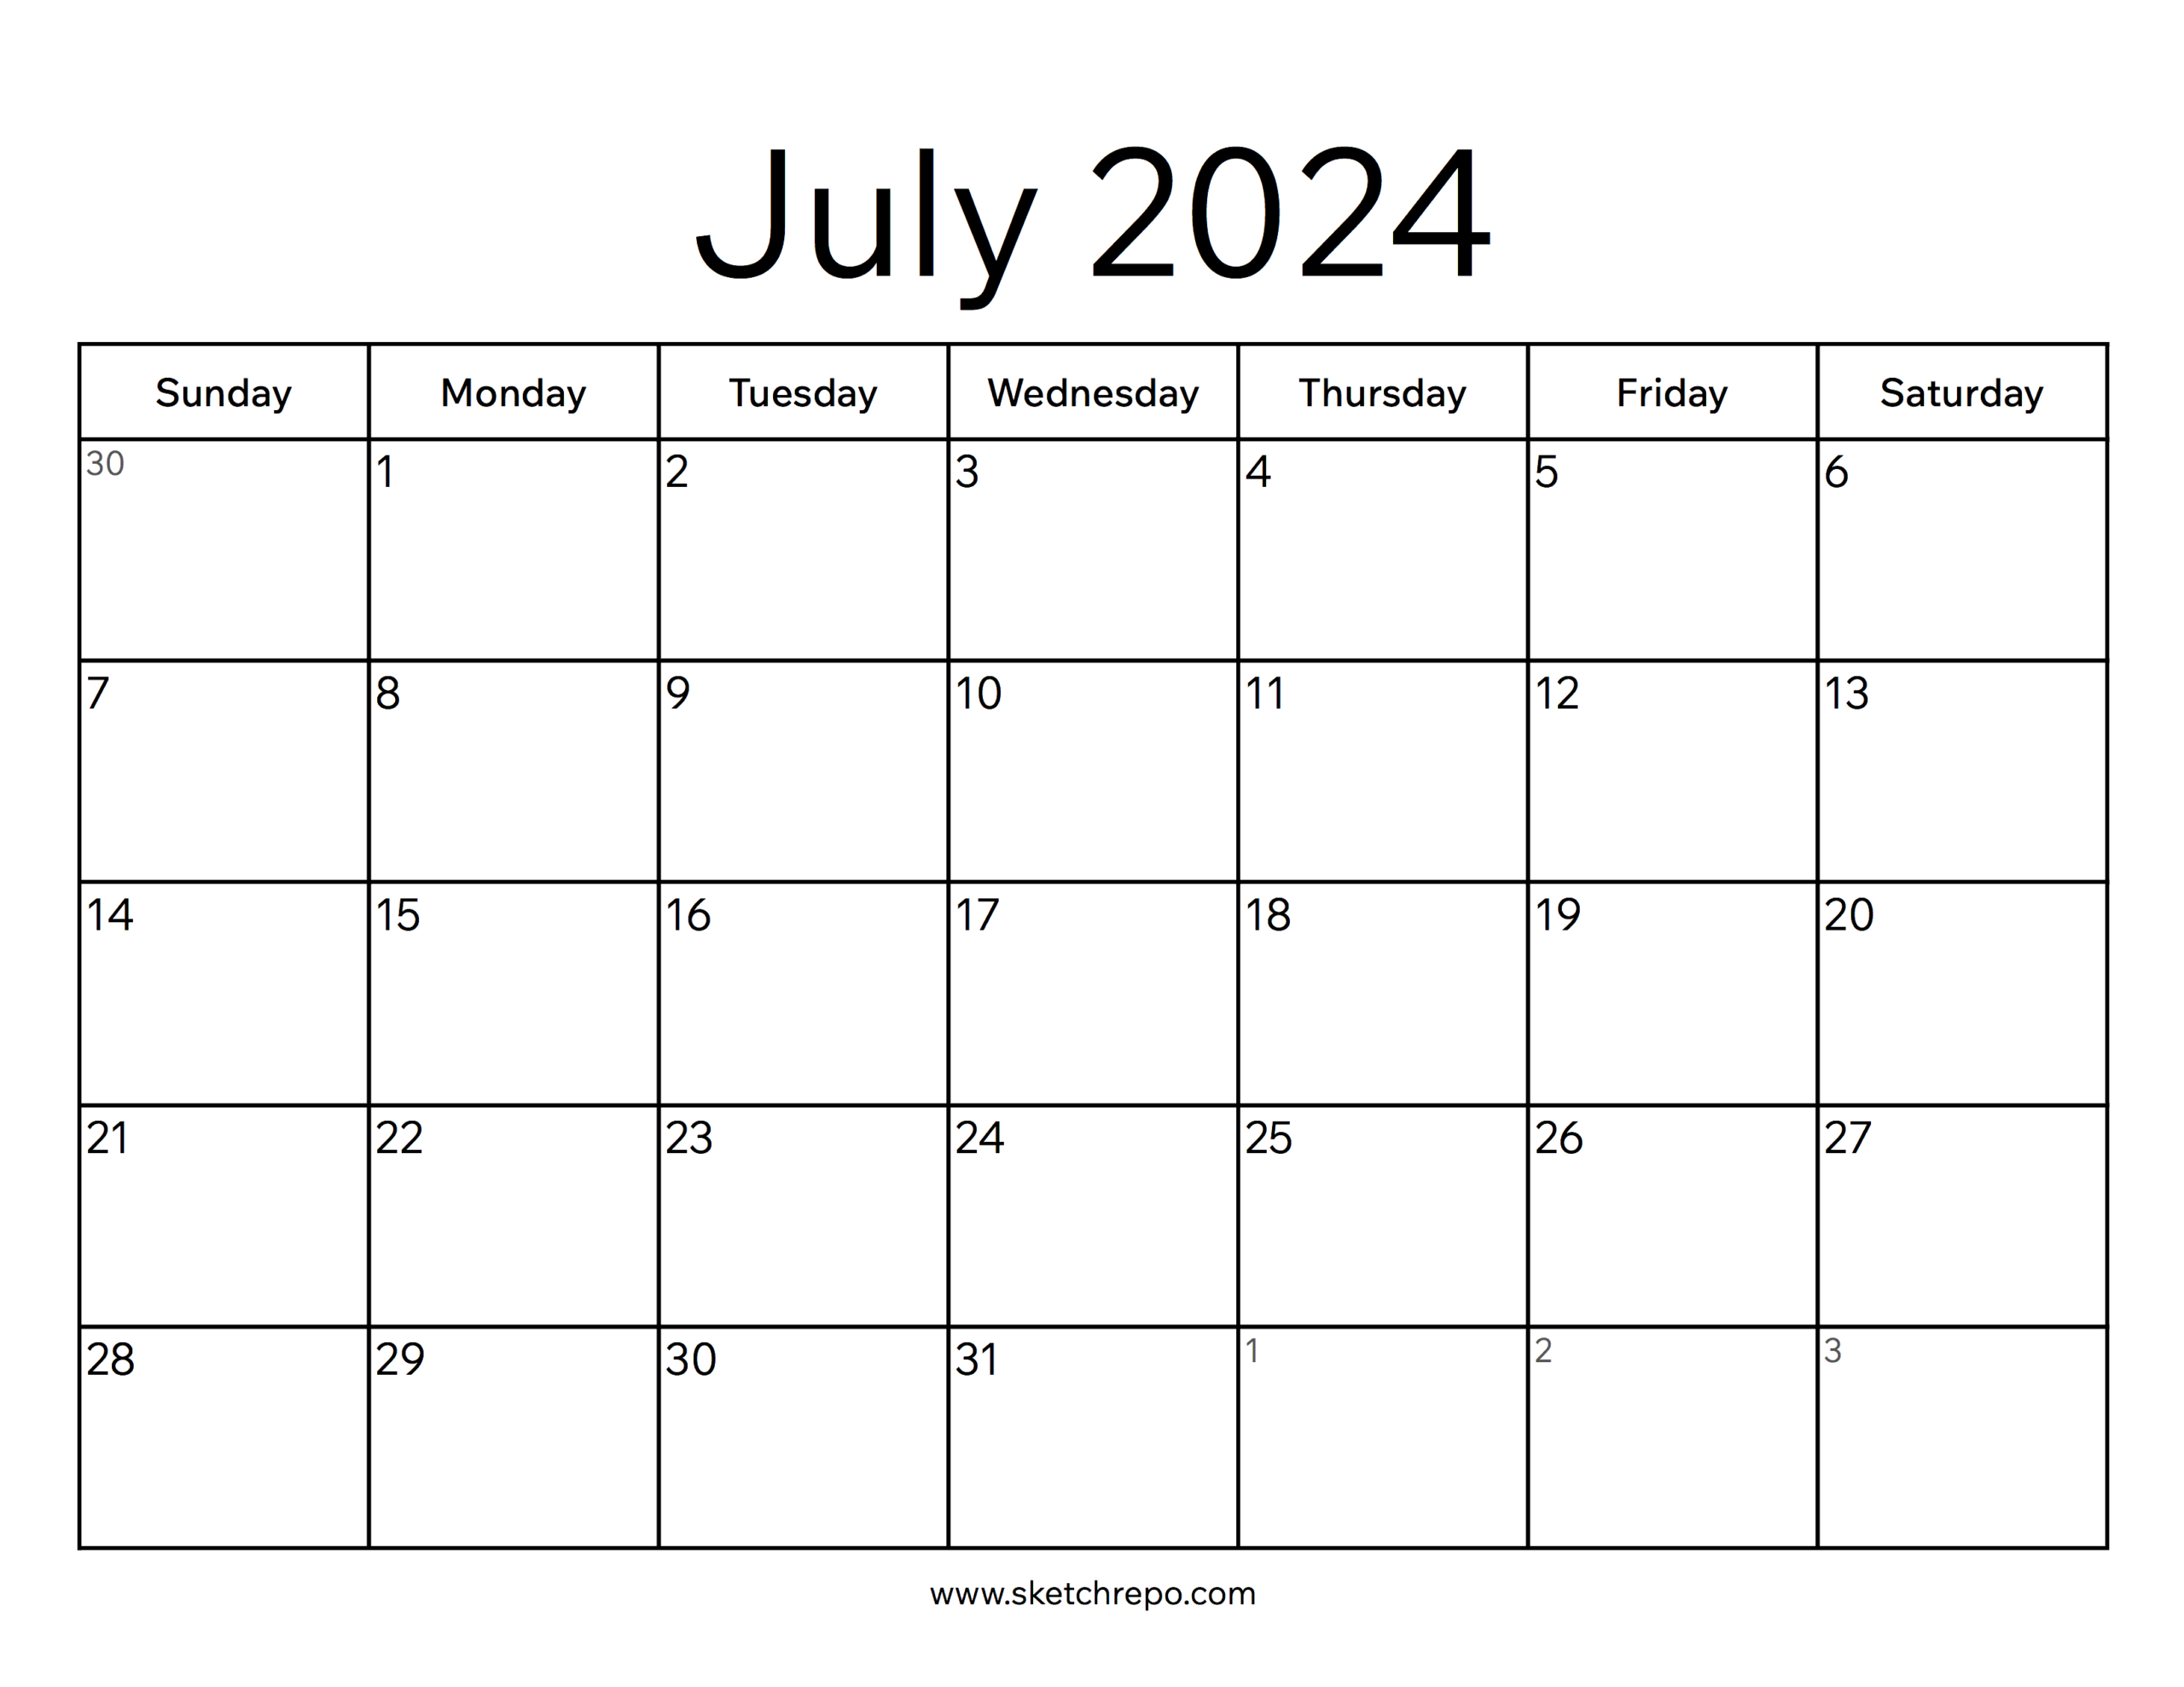 July 2024 Calendar – Sketch Repo pertaining to July 2024 Calendar Dates